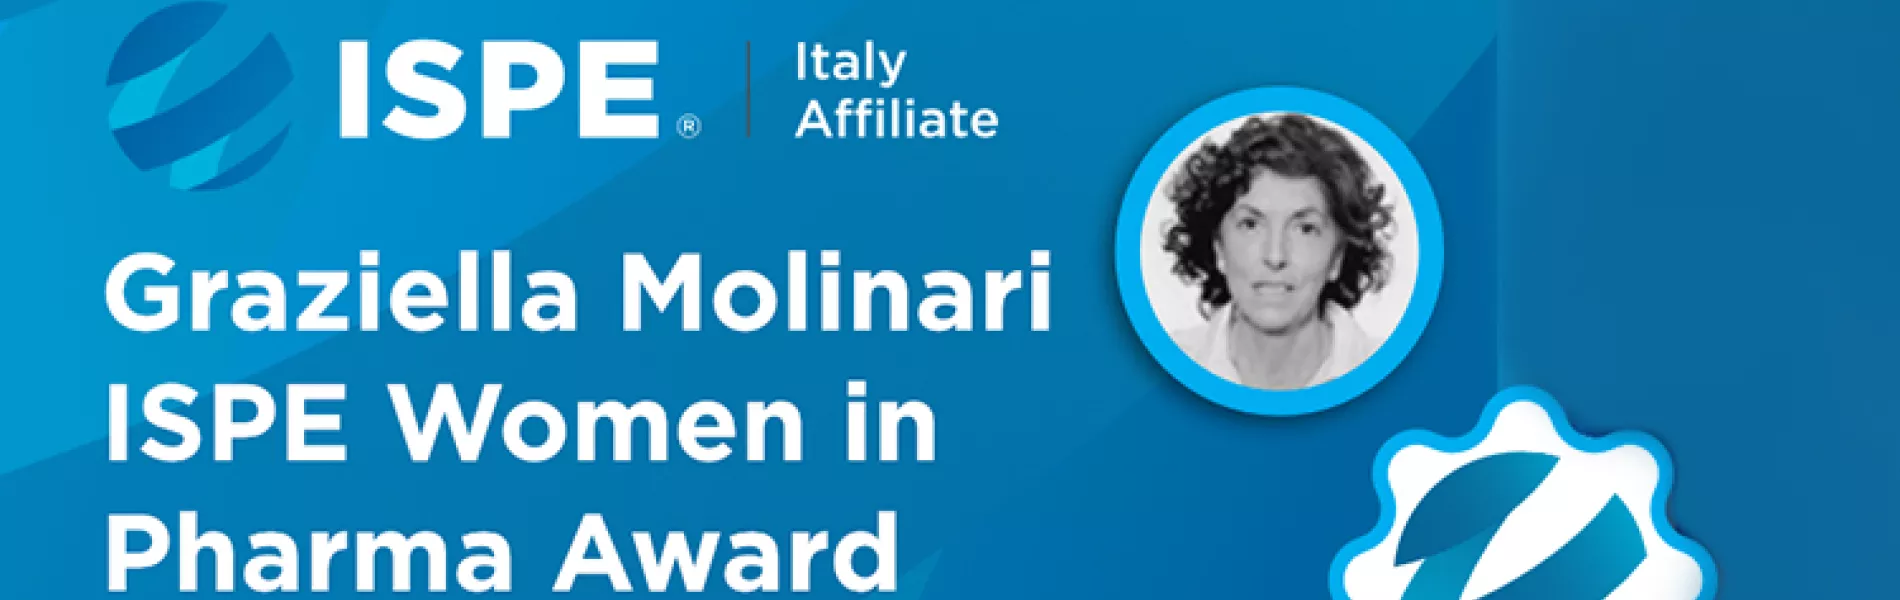 The “Graziella Molinari Women in Pharma Award” Announced for 2022 Edition at the ISPE Italy Affiliate